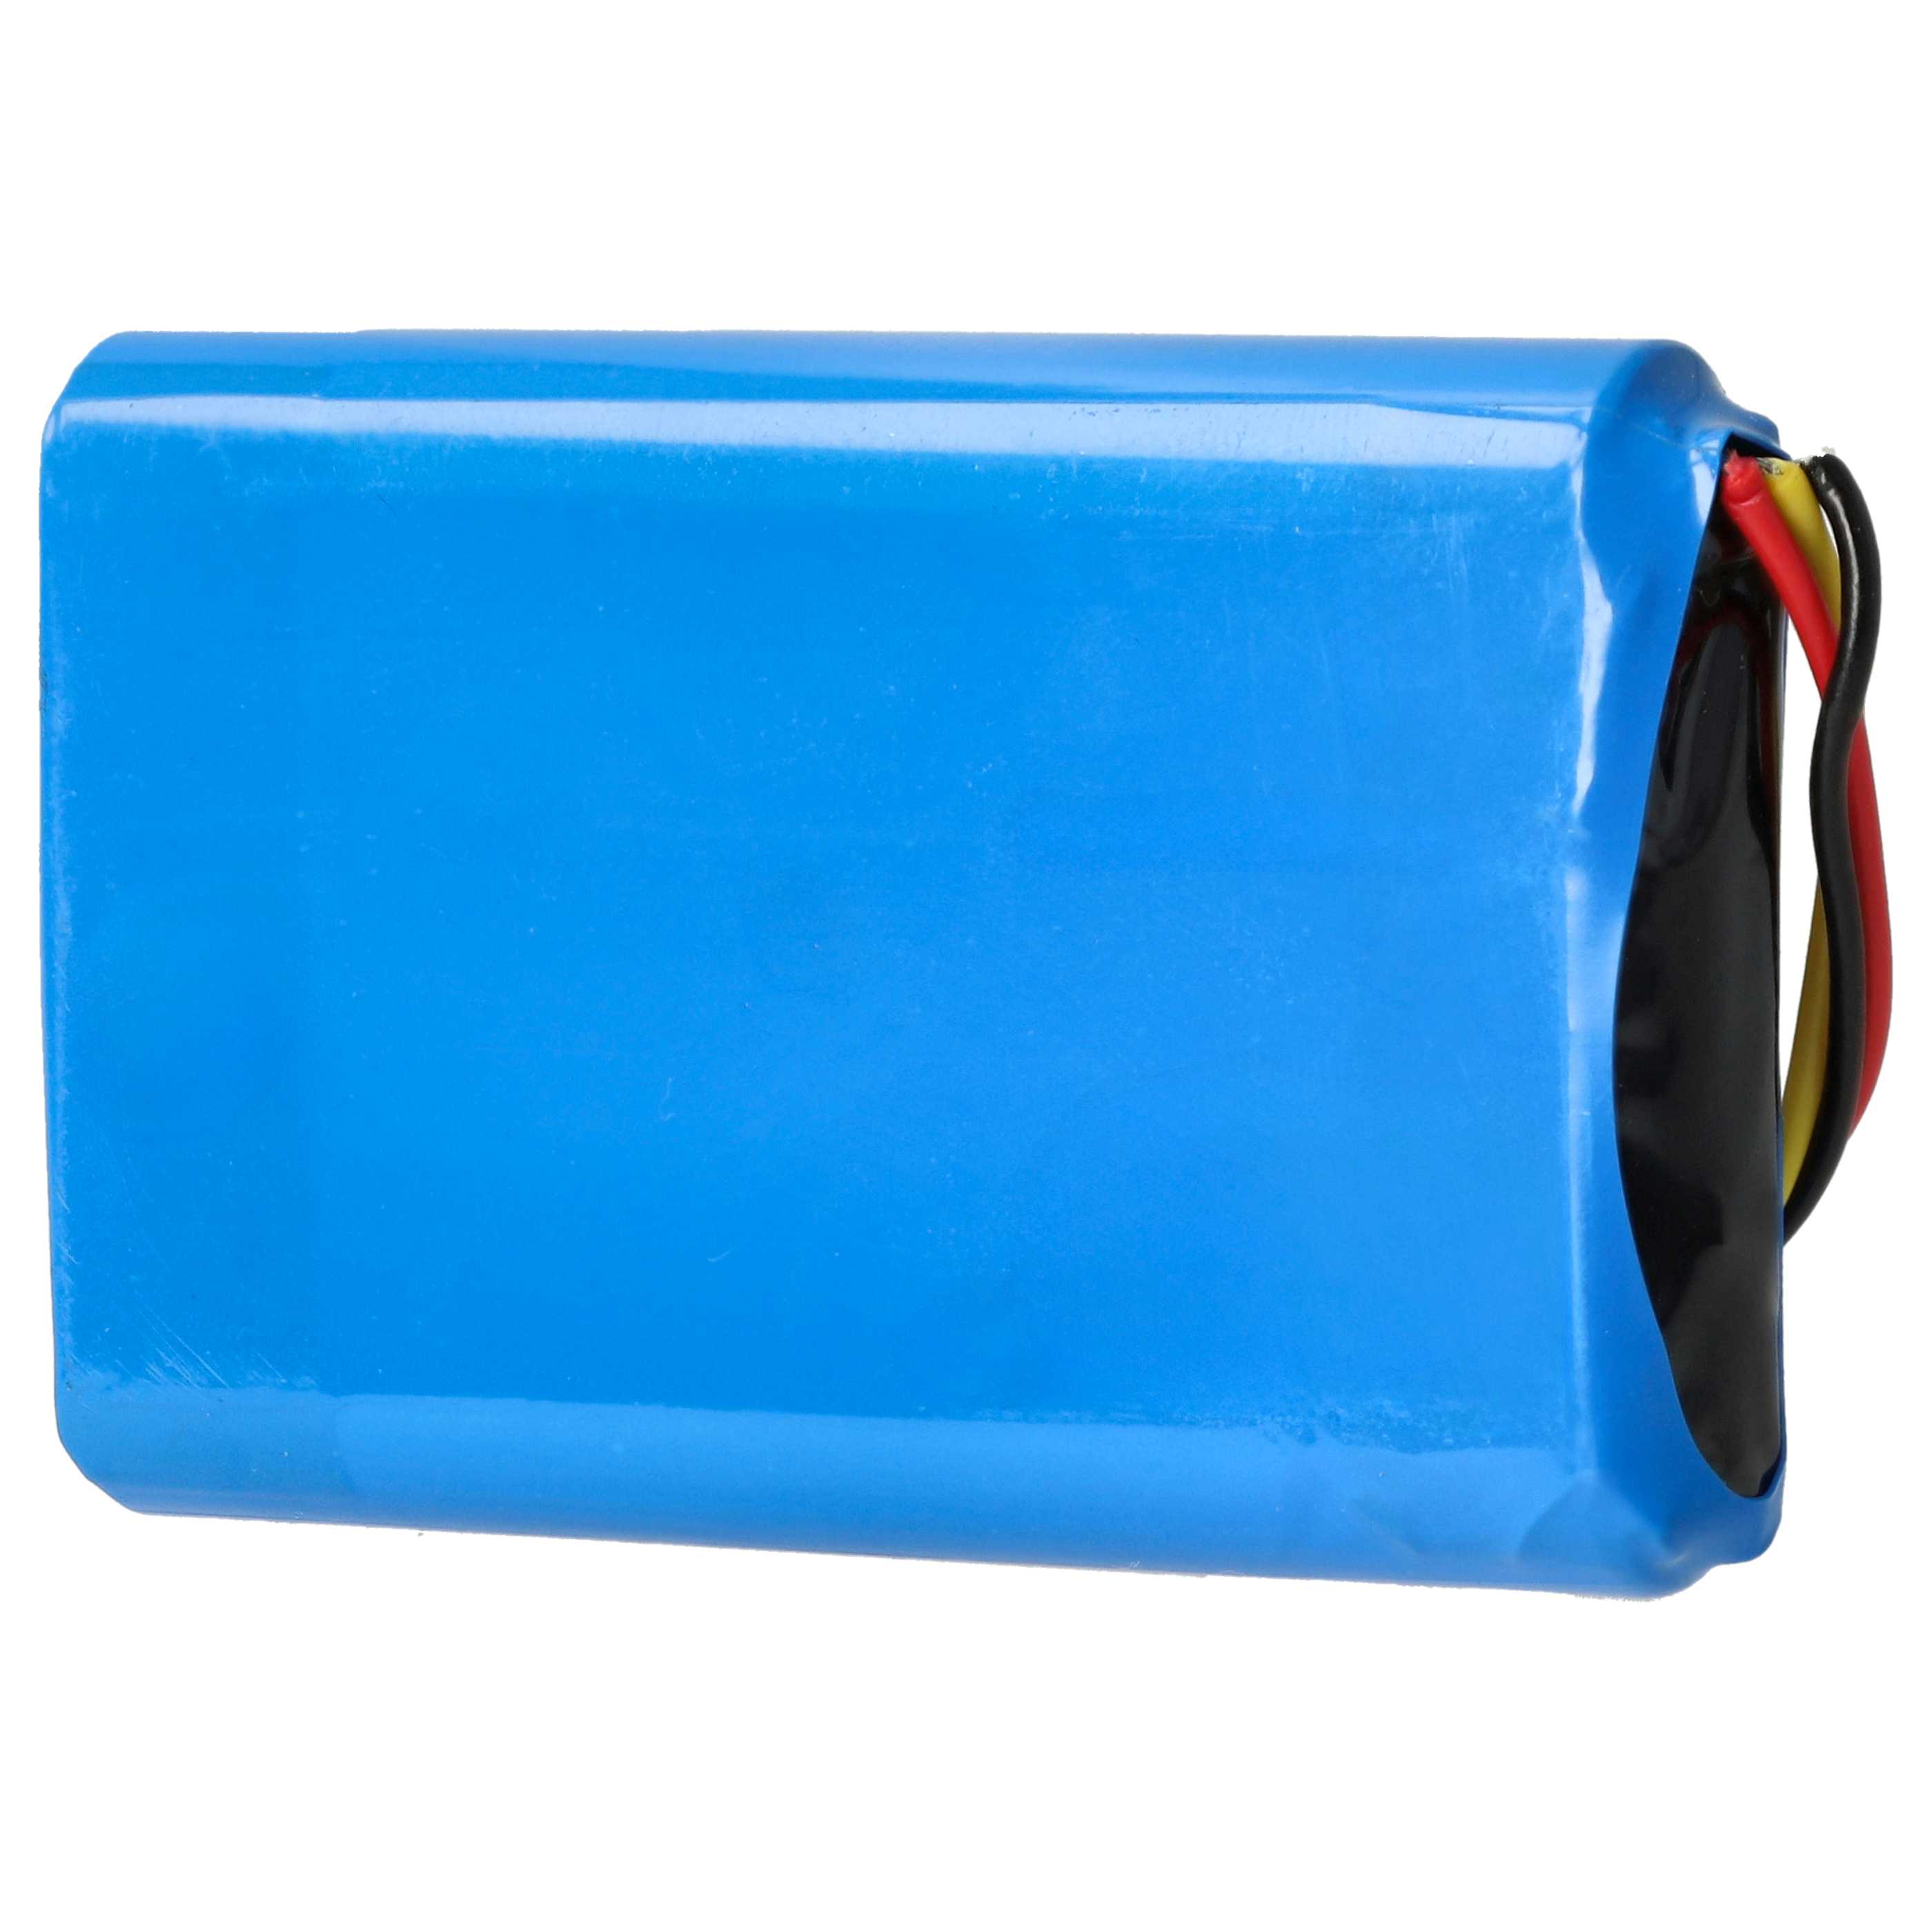 Akumulator bateria do myszki zamiennik Logitech 190247-1000, L-LB2 - 2000 mAh 3,7 V Li-Ion